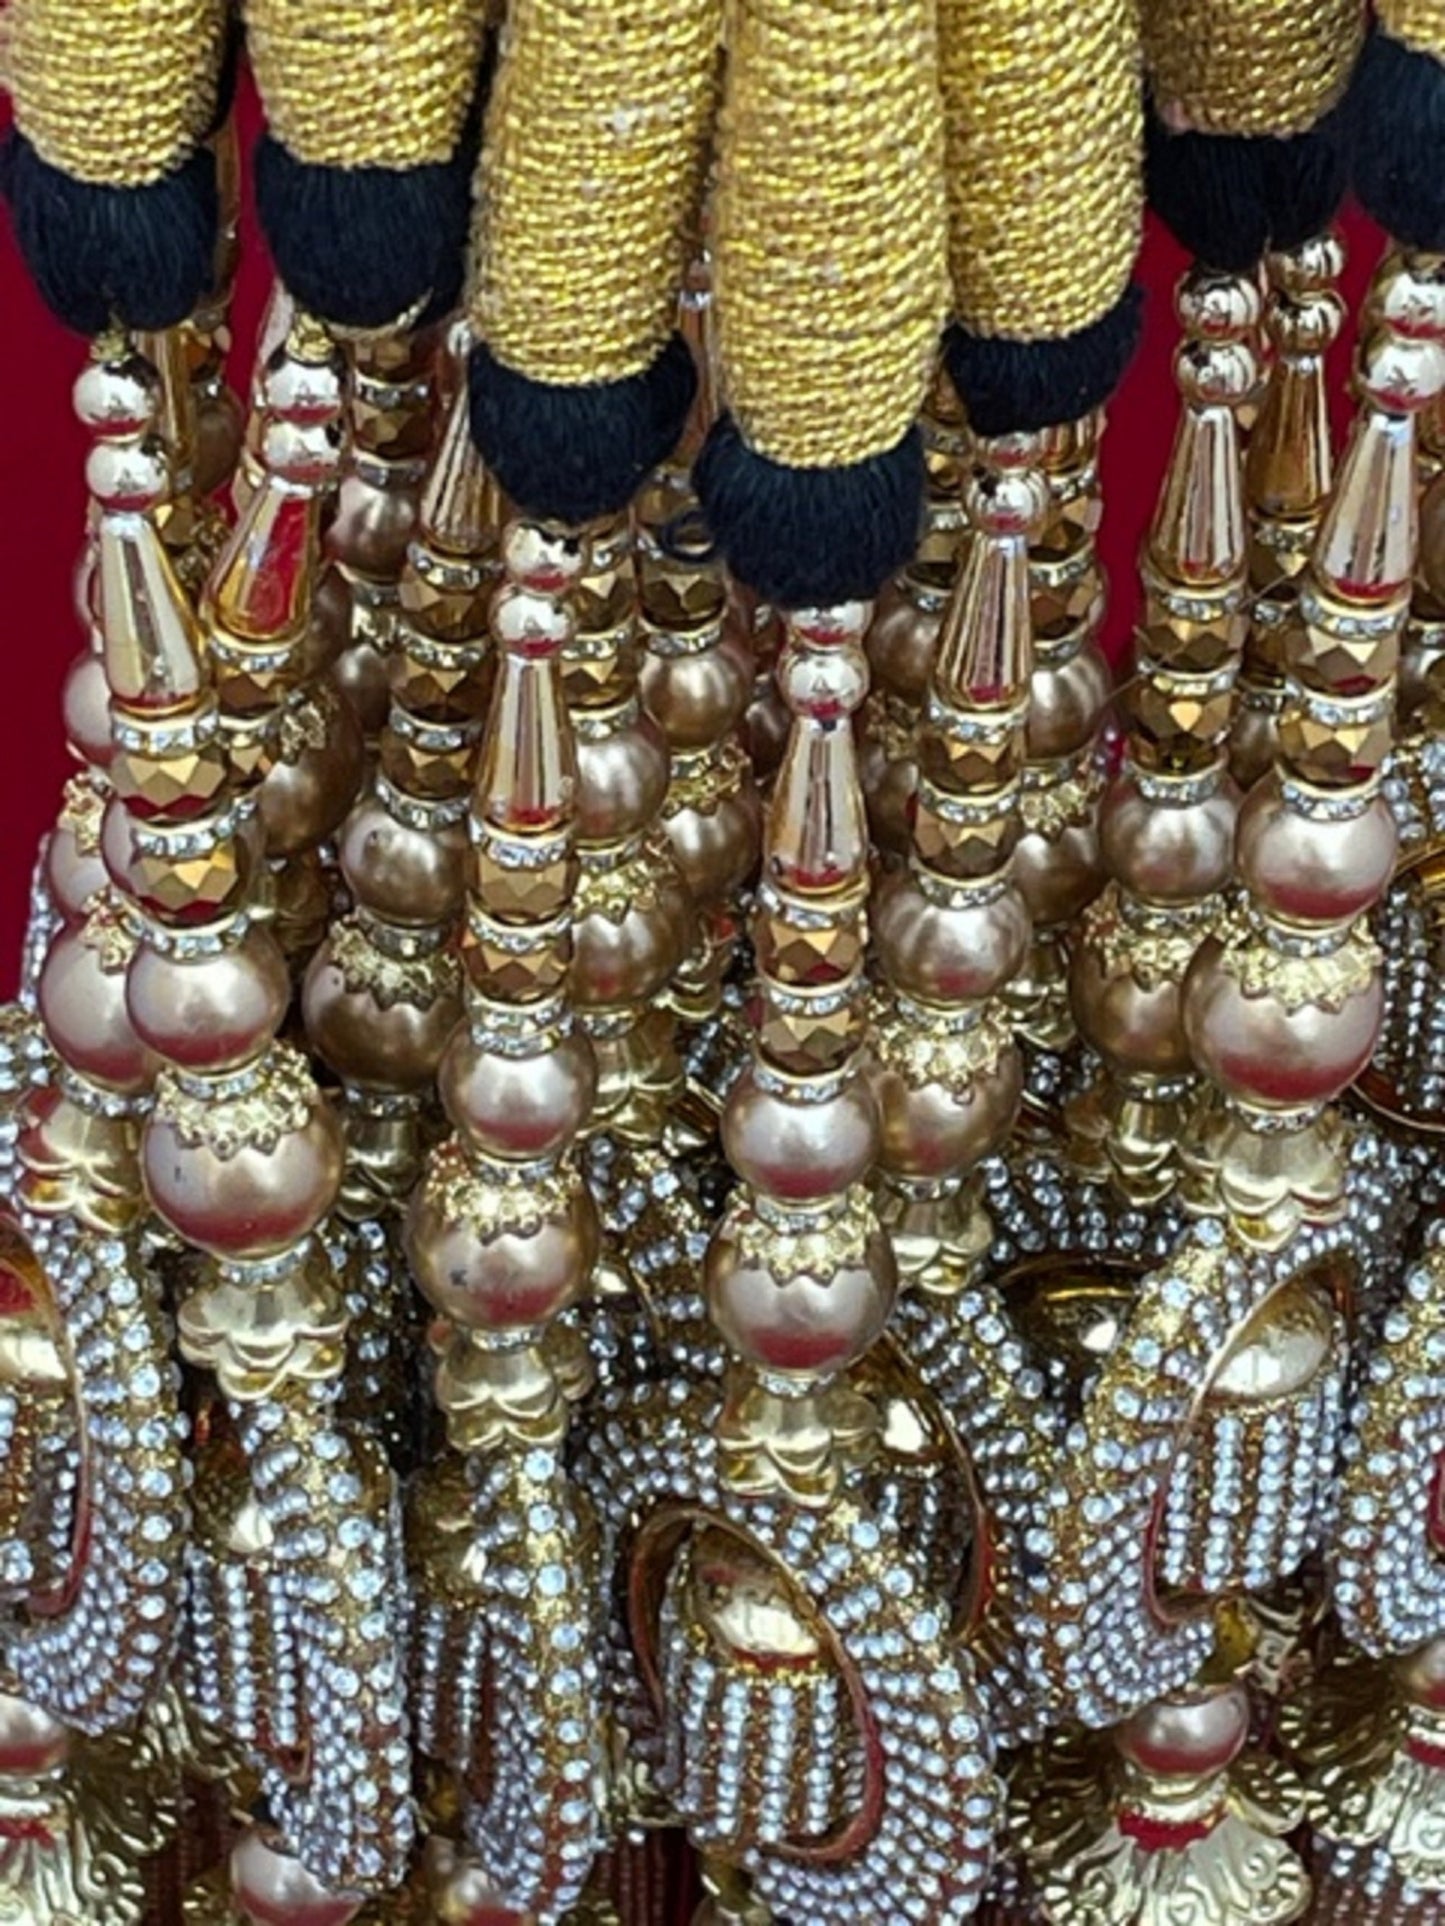 Golden Paranda with Glass Beads Hanging Latkans Parandi Parandey Punjabi Themed Weddings Phulkari Patiala Sangeet Mehendi Maiyoon Jago